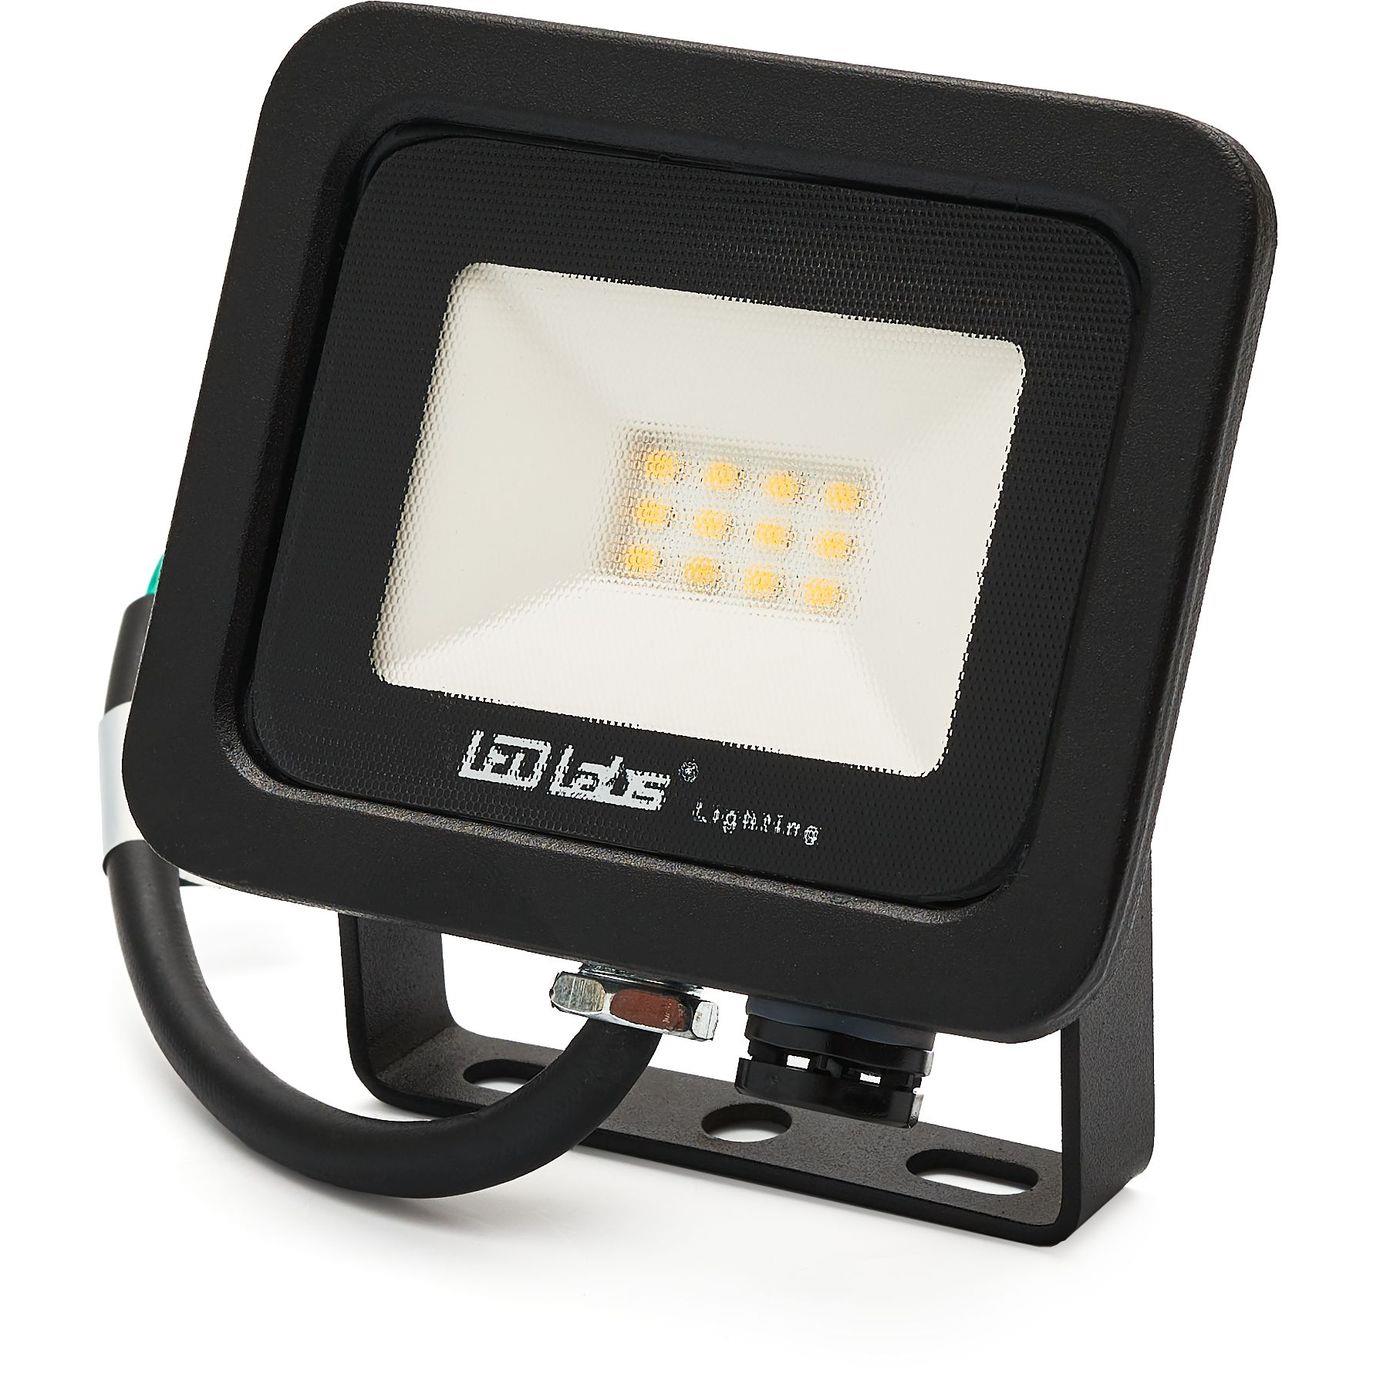 LED Floodlight Spotlight 10W 850lm Neutral White 4000K 103x93x24mm Black -35...+55°C IP65 110° CRI 80+